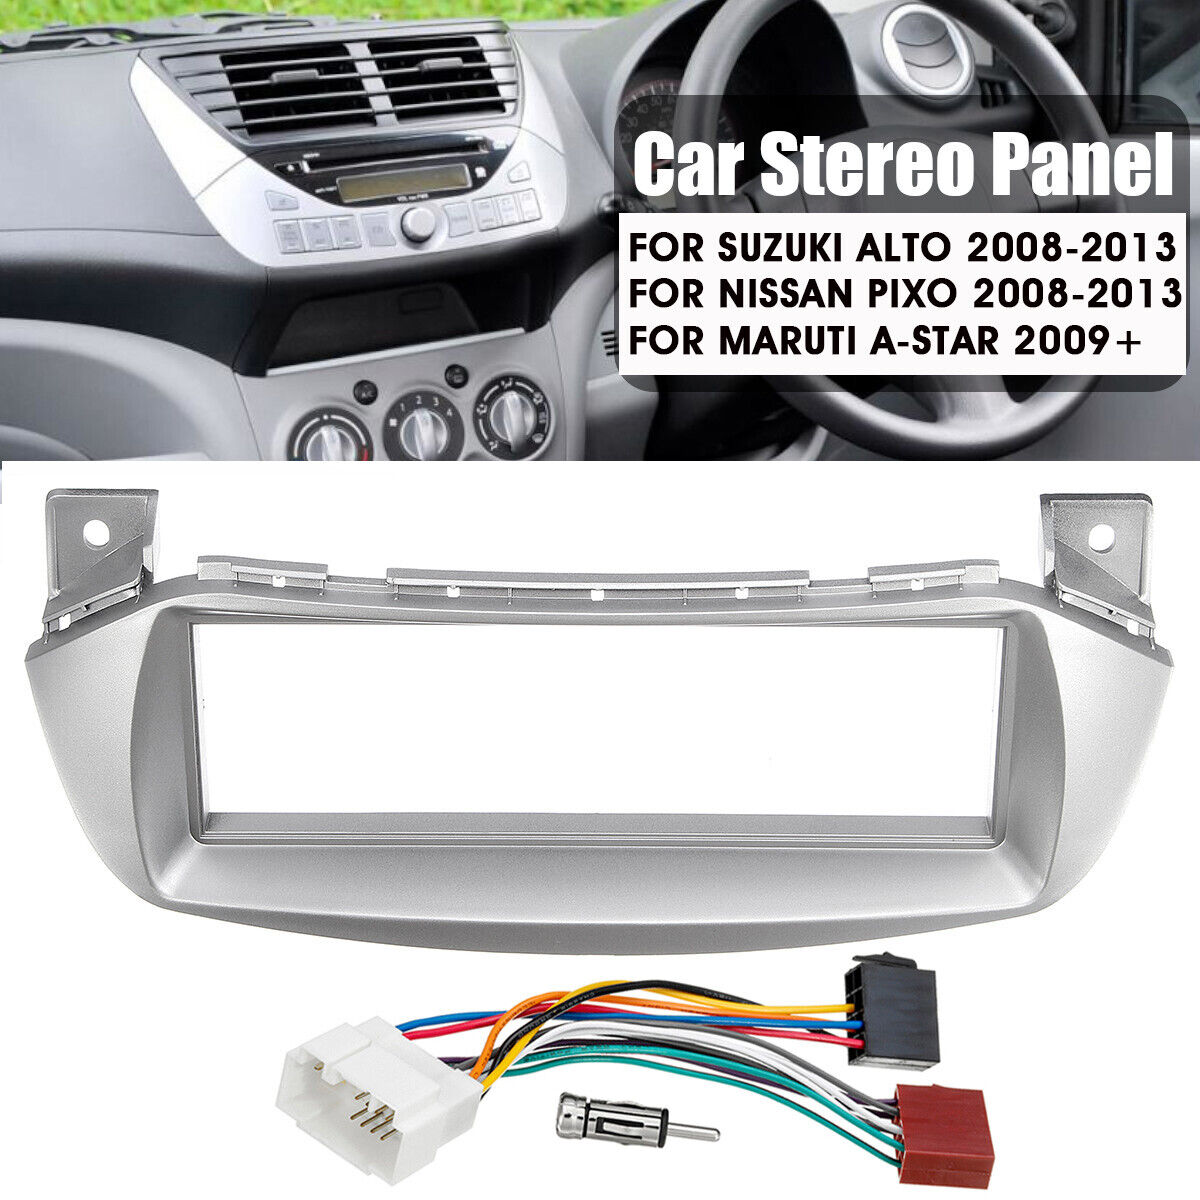 Car Stereo Radio Fascia Panel ISO Fitting Kit For Alto Pixo | eBay